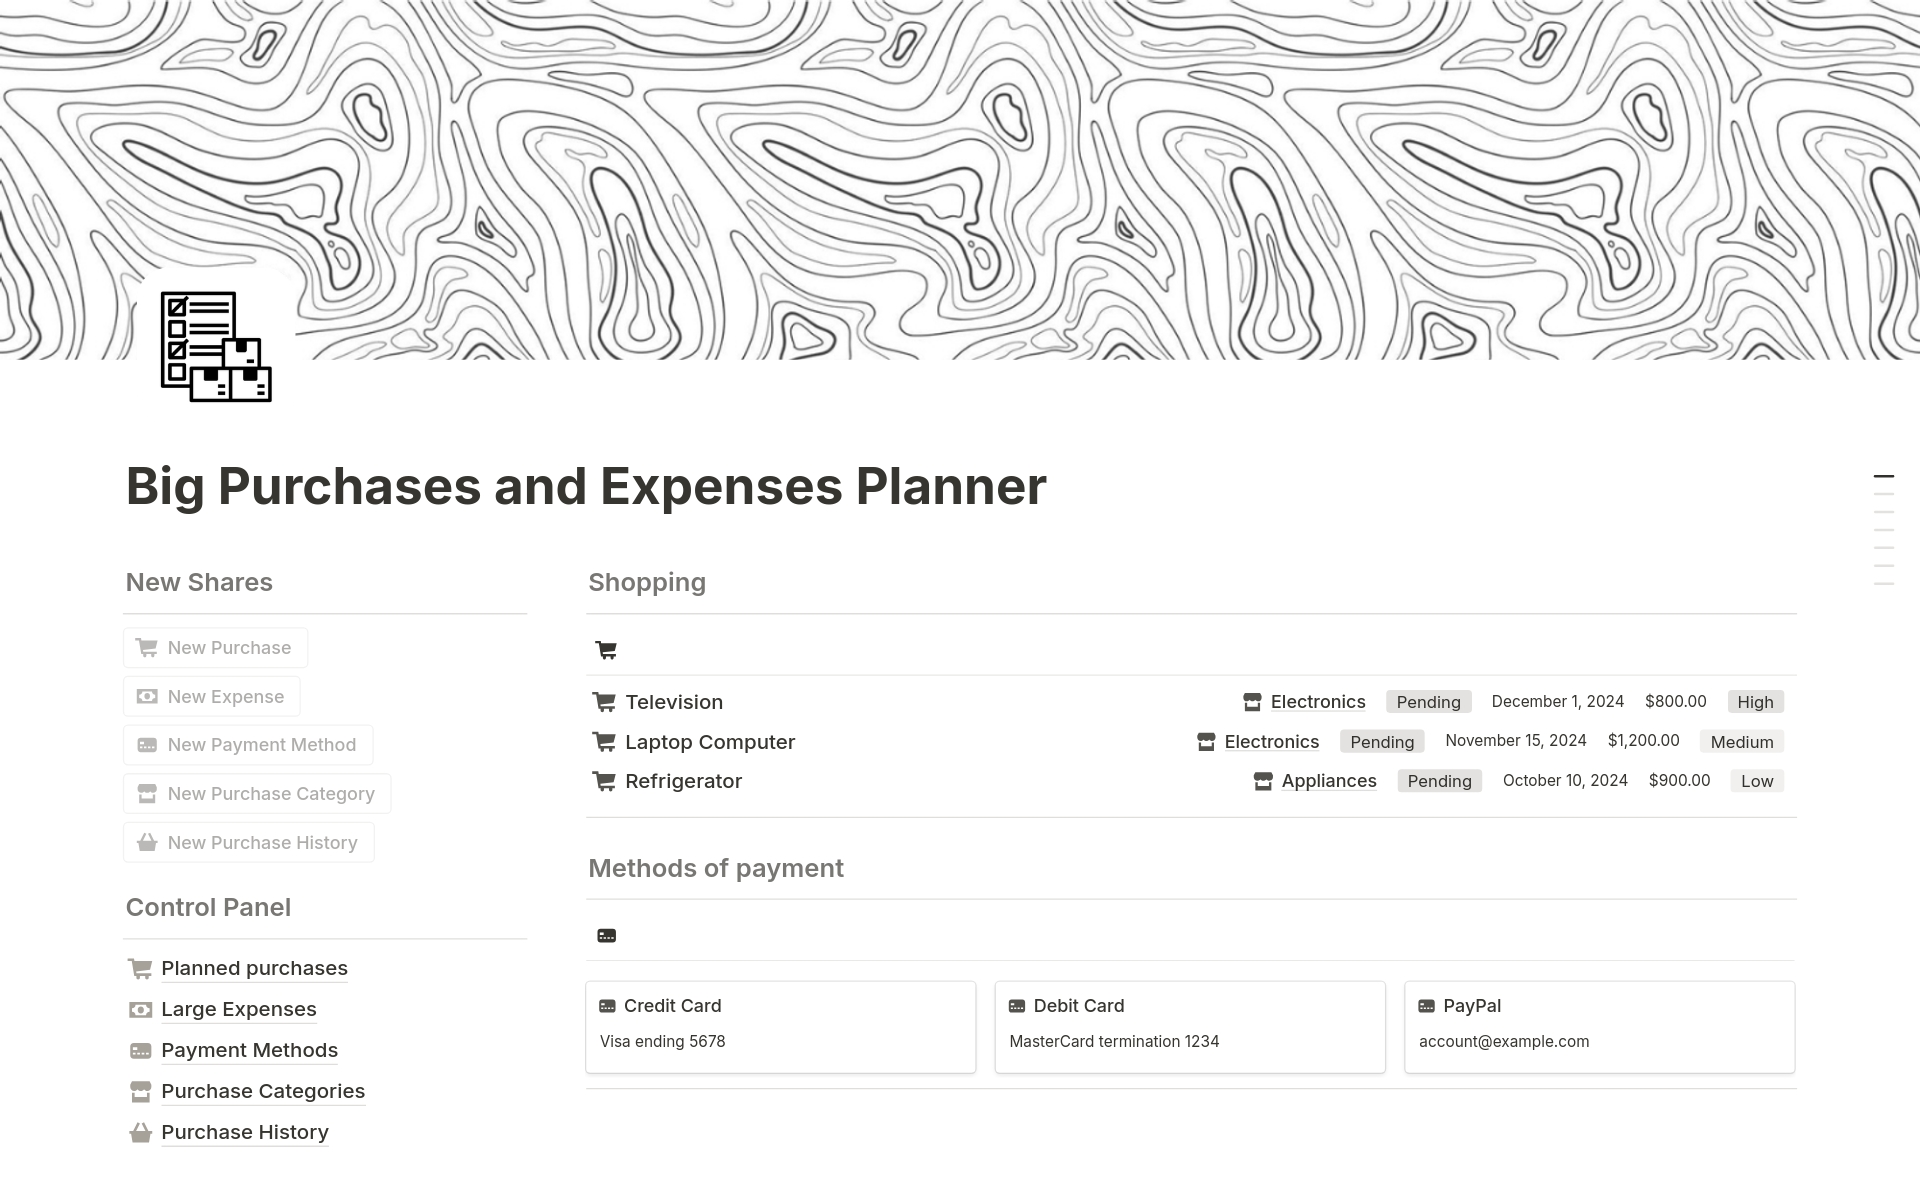 Vista previa de plantilla para Big Purchases and Expenses Planner